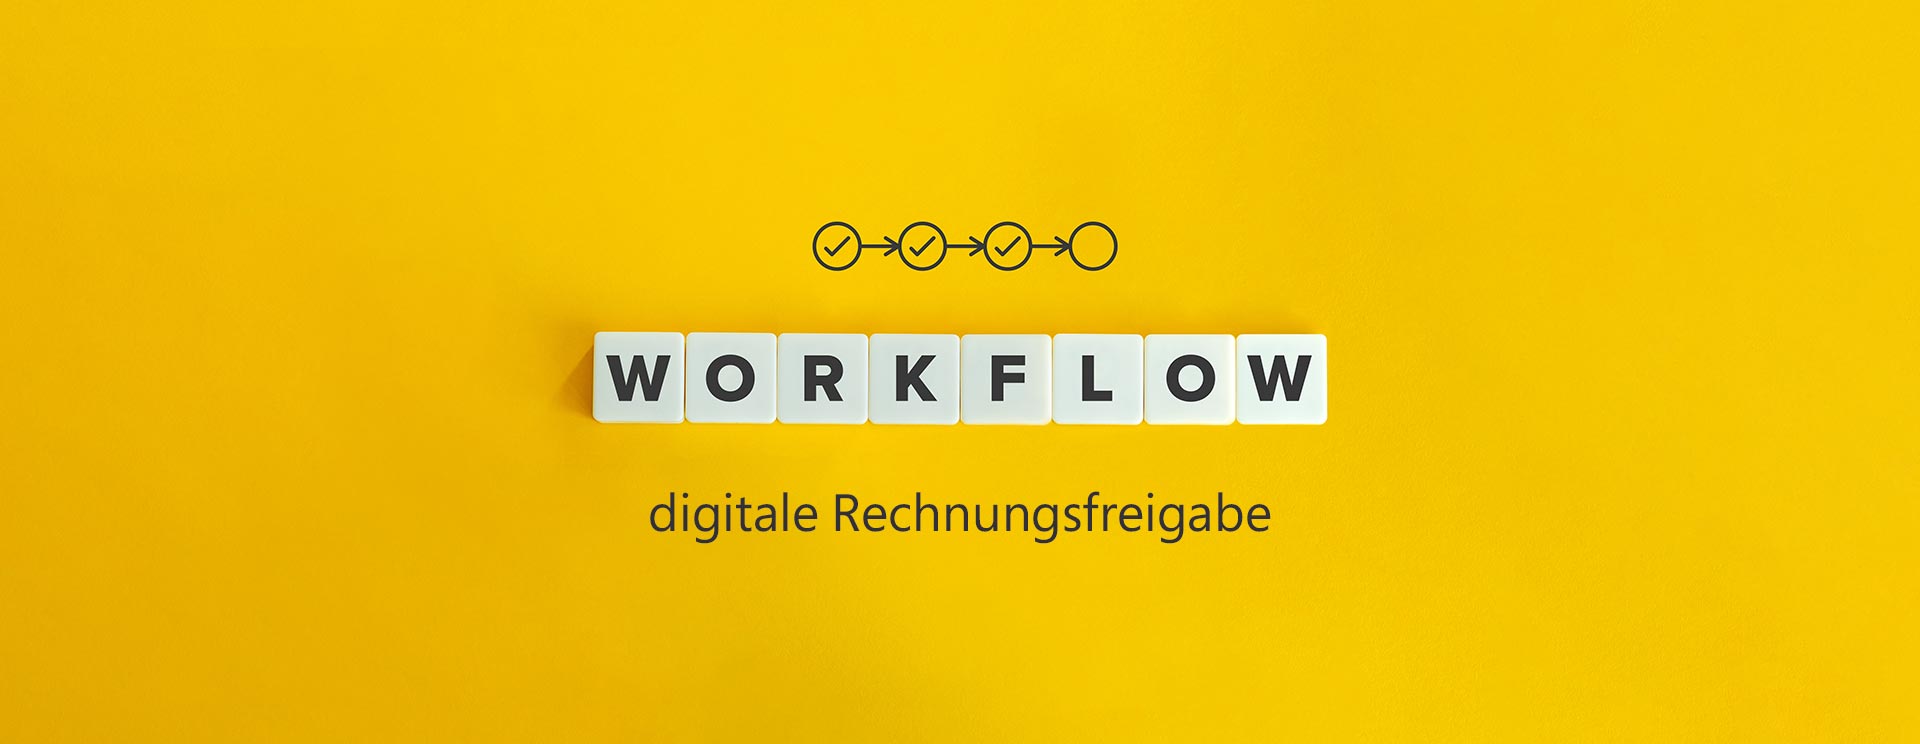 Logisth.AI Workflow